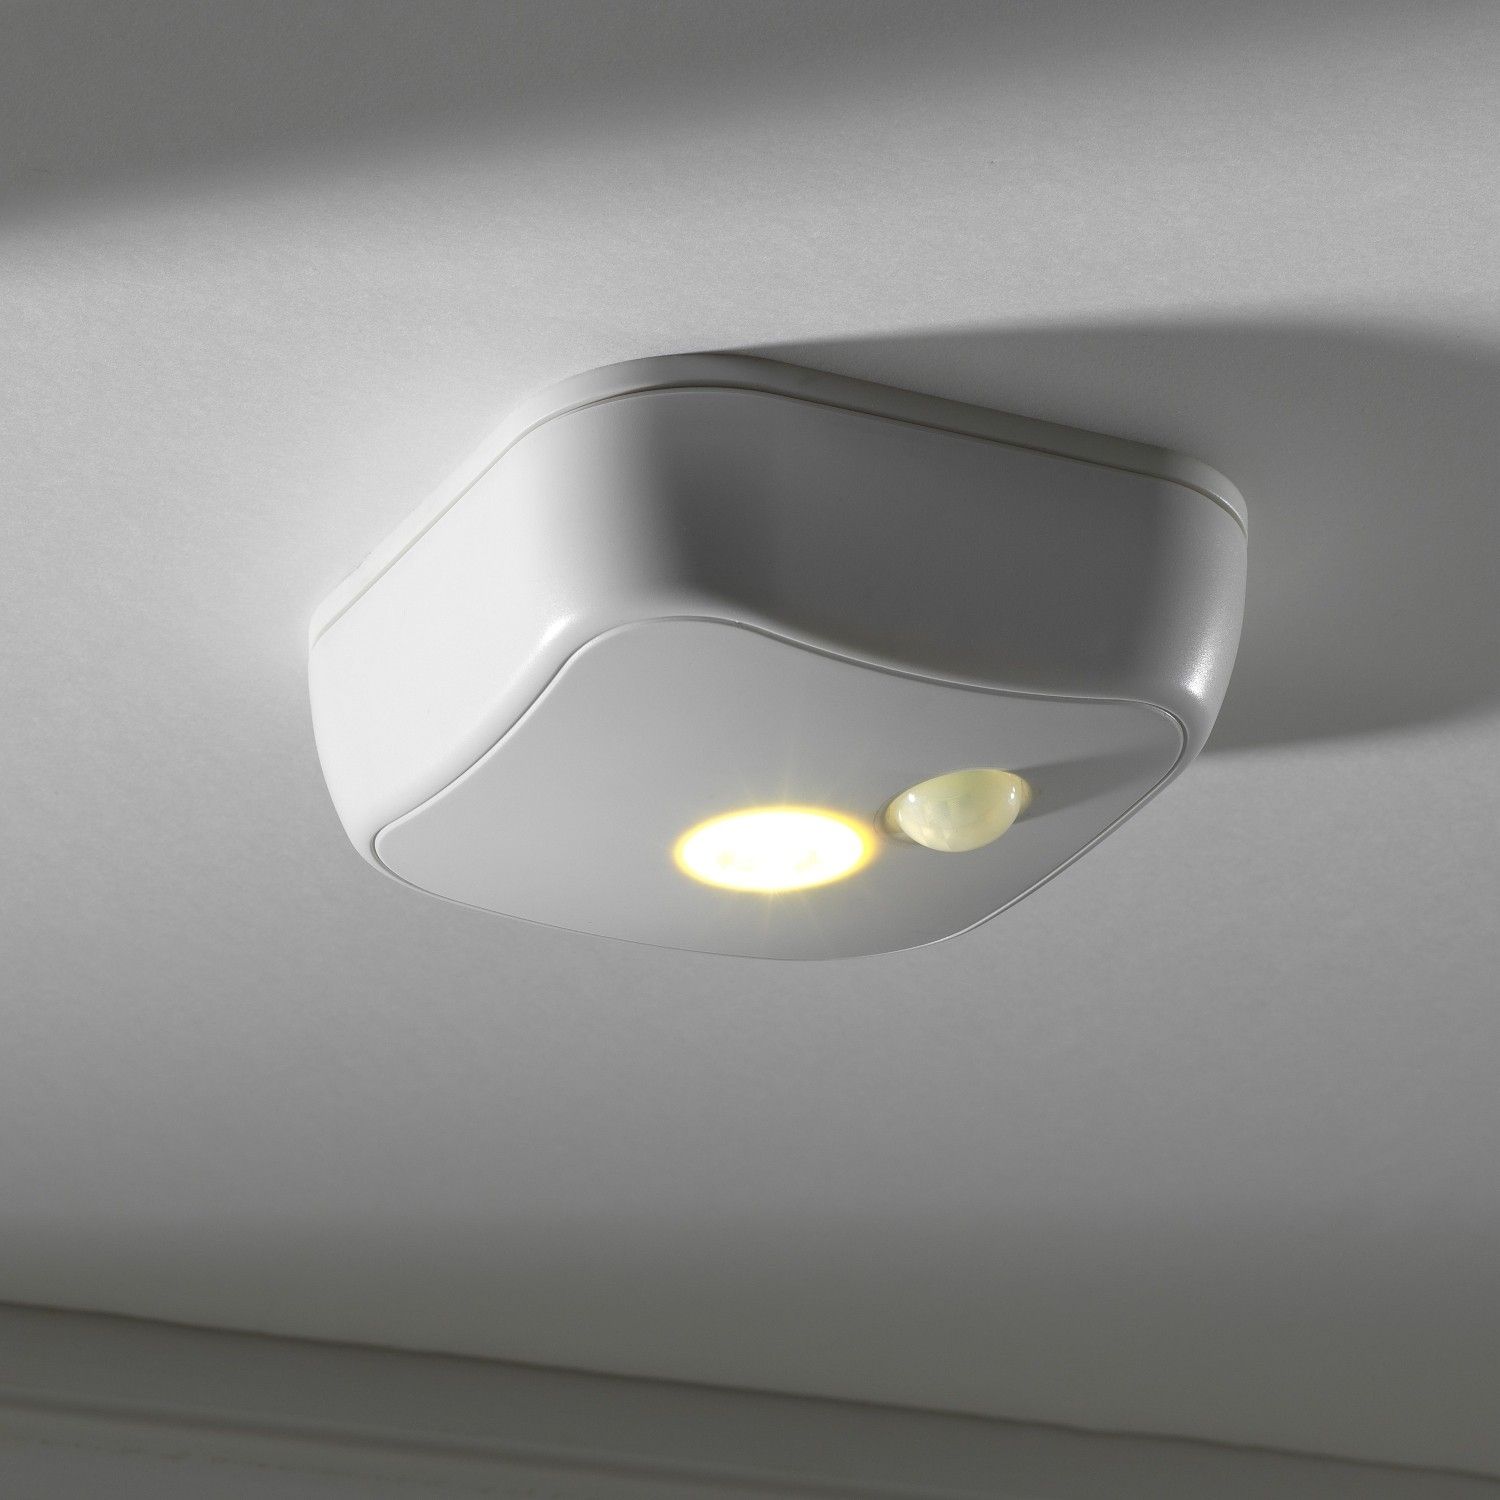 Auraglow Wireless Pir Motion Sensor Led Ceiling Light – Safield Regarding Outdoor Ceiling Lights With Pir (View 7 of 15)